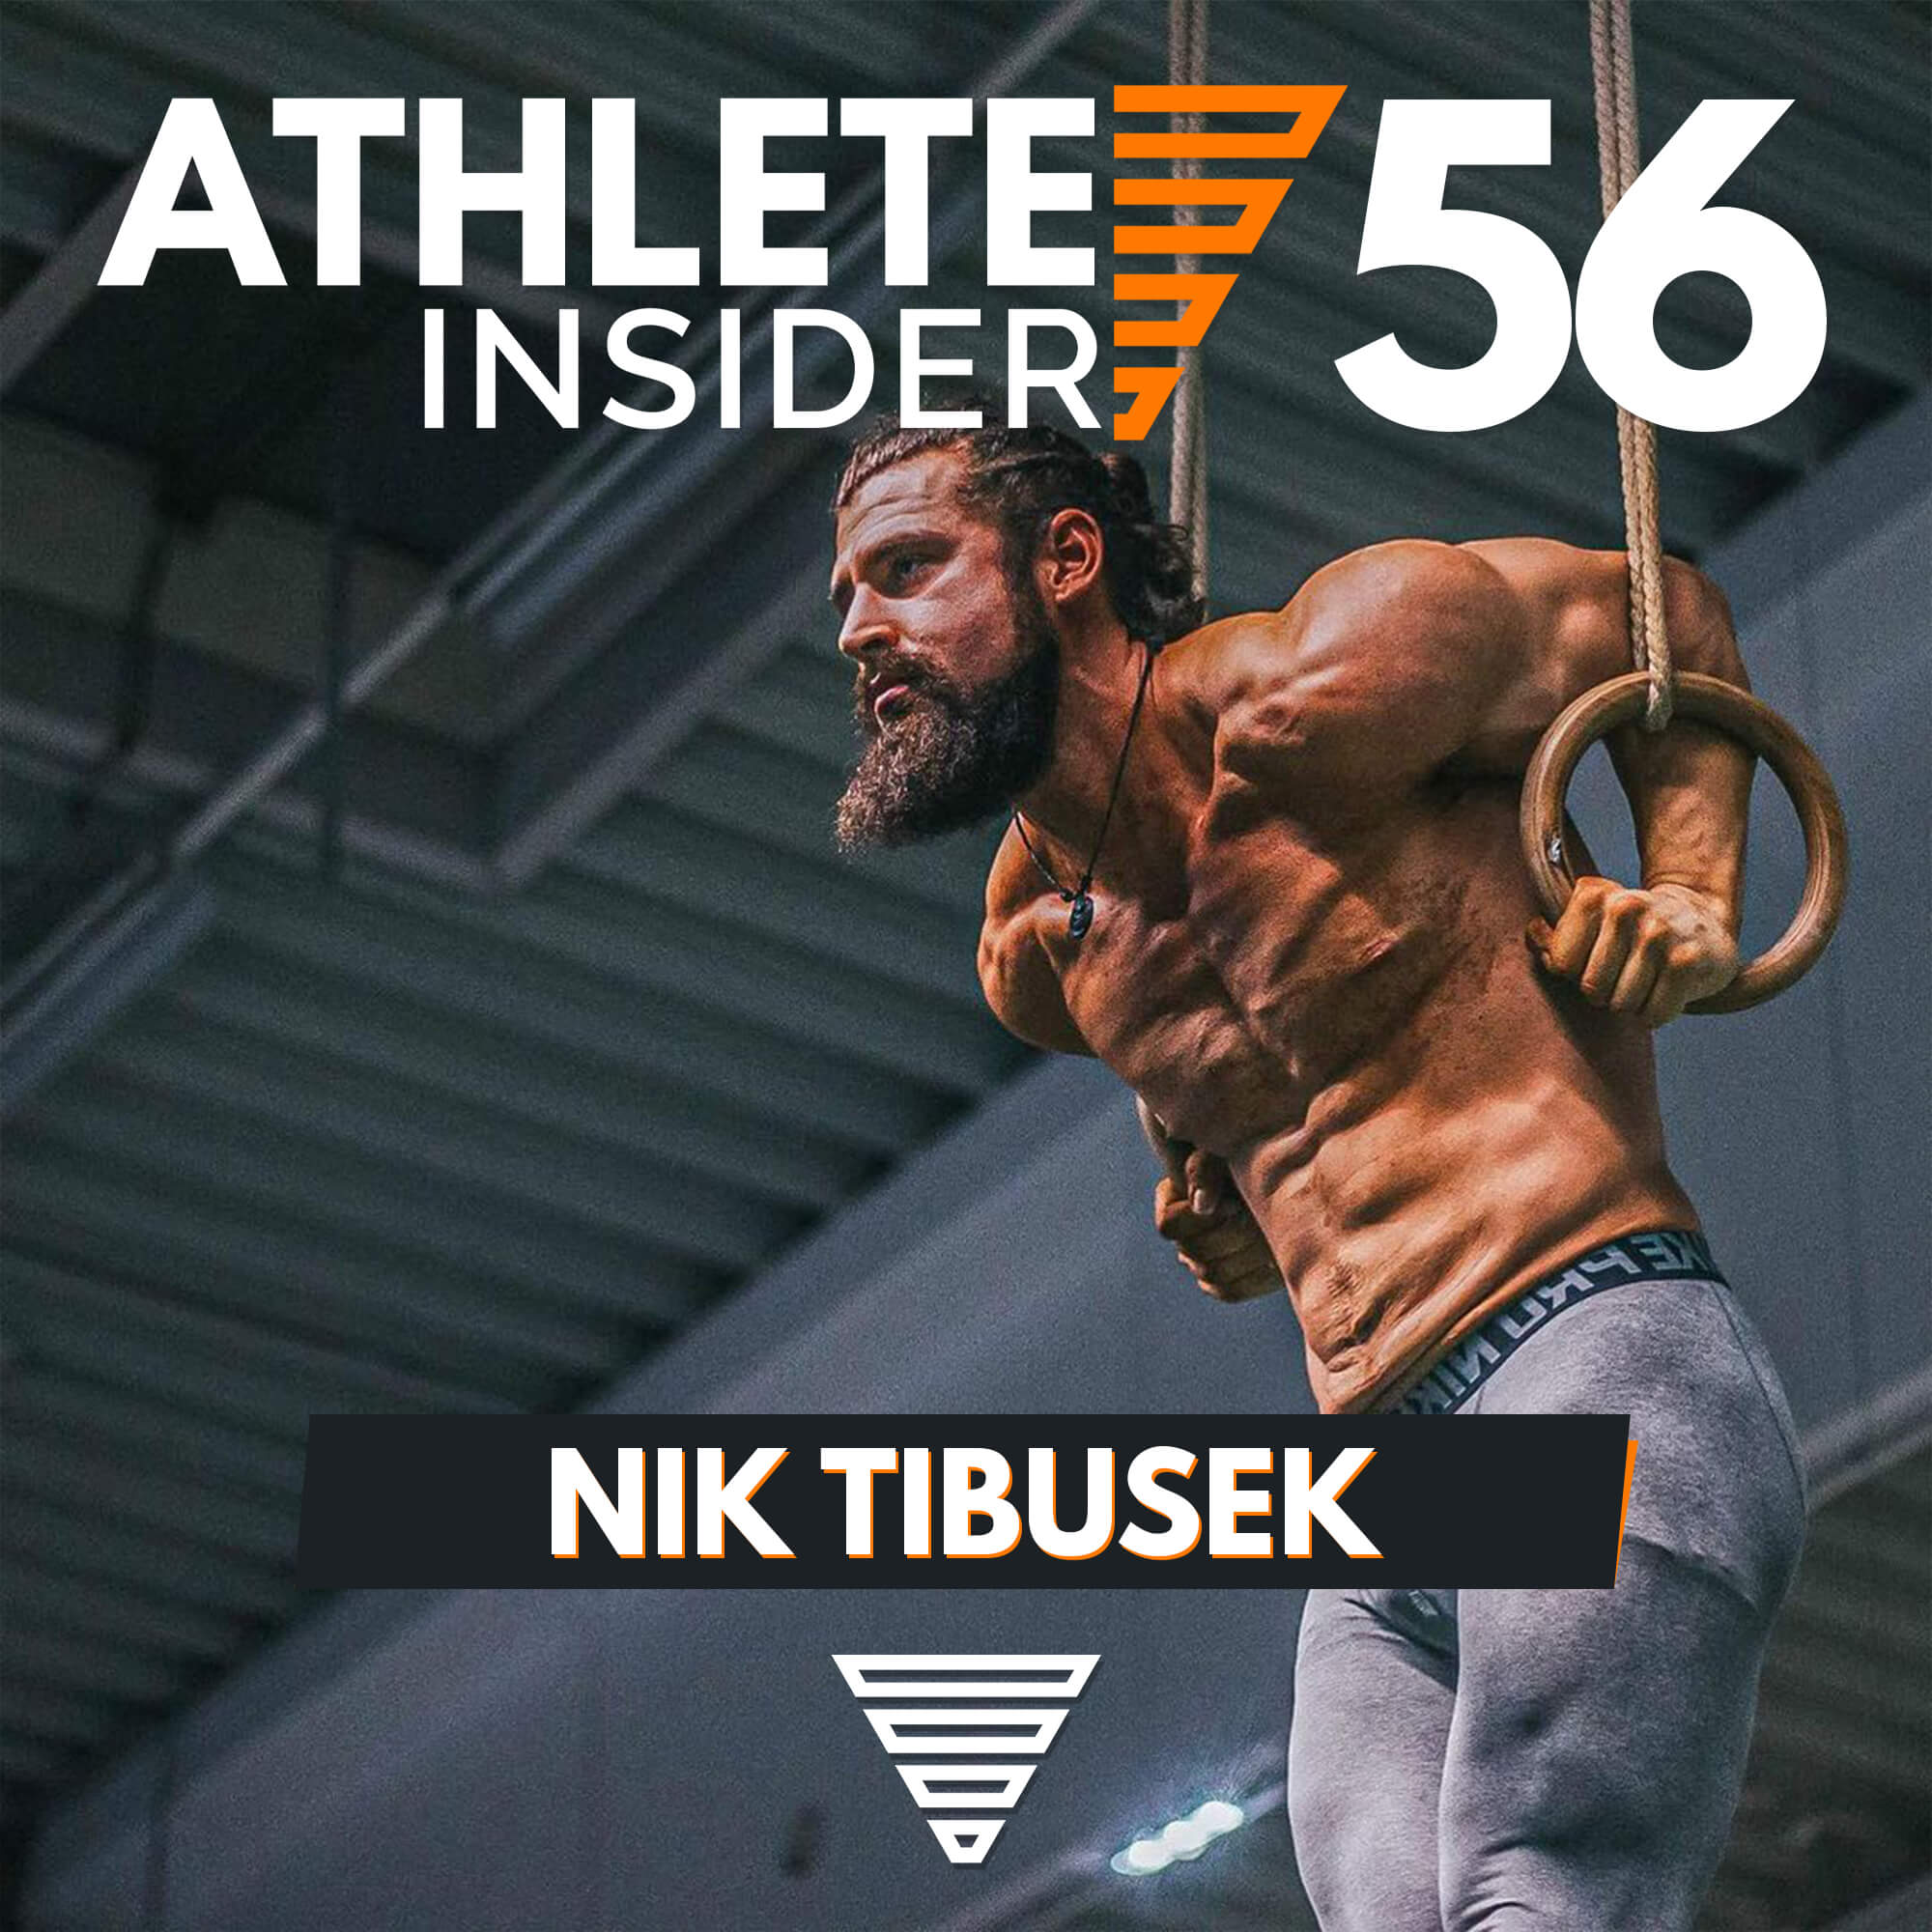 NIK TIBUSEK | Weighted Calisthenics, Statics & Deloads | Interview | The Athlete Insider Podcast #56